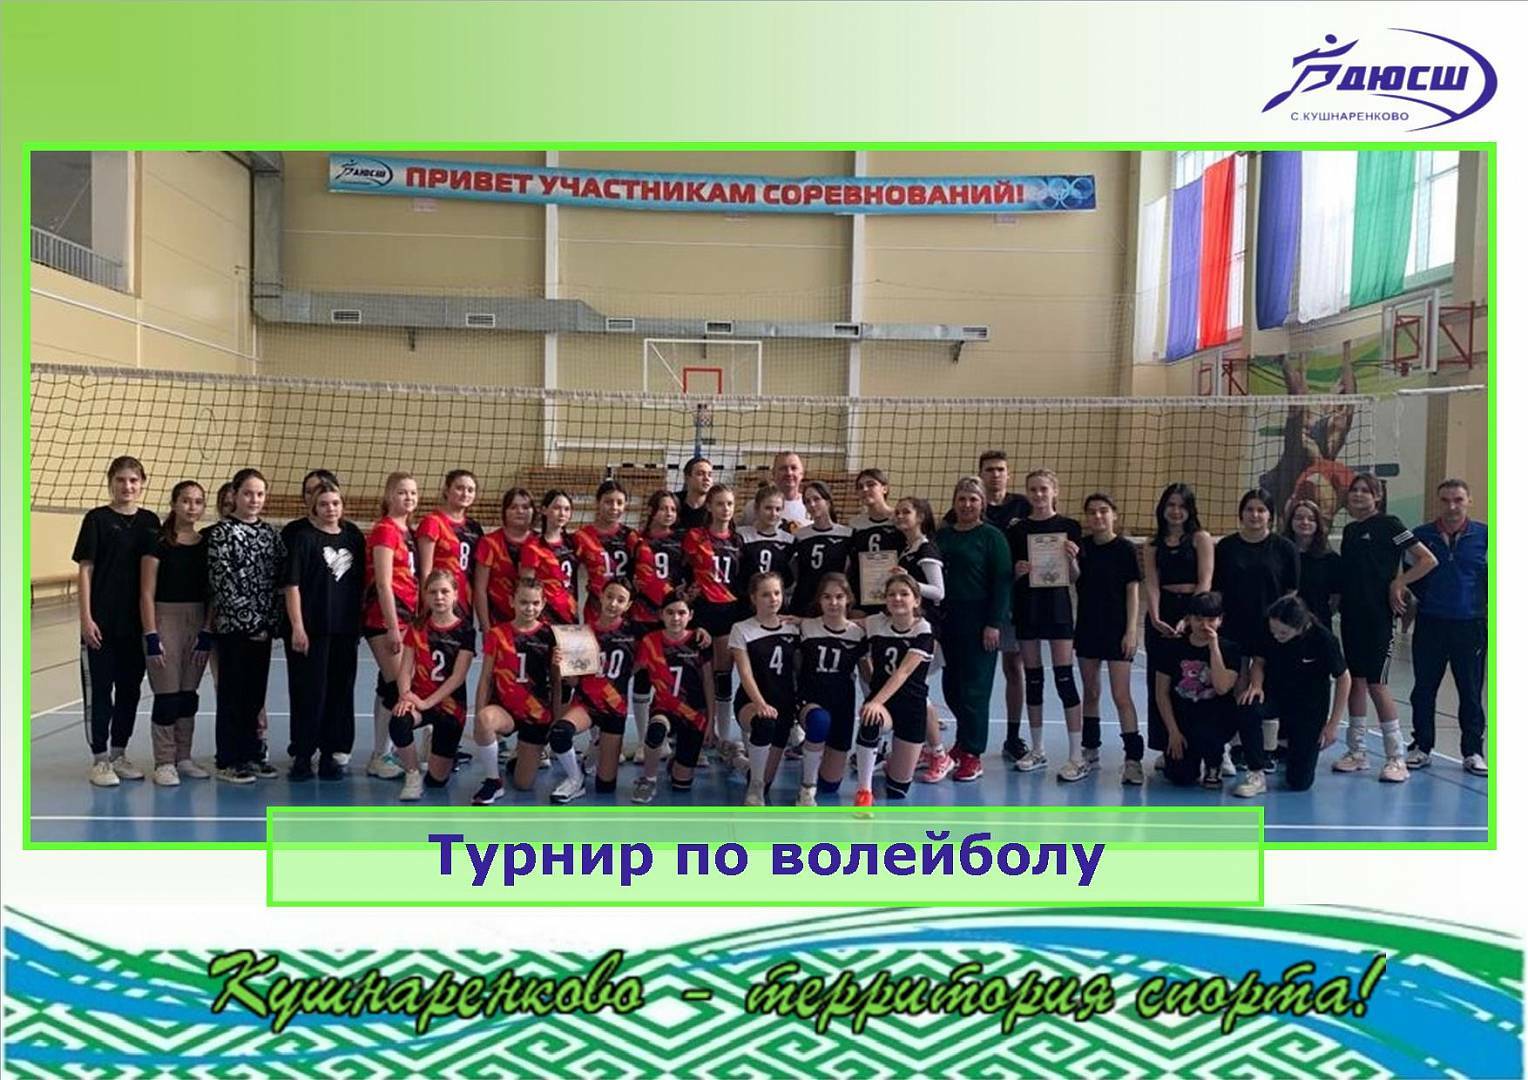 Кушнаренкода – волейбол!